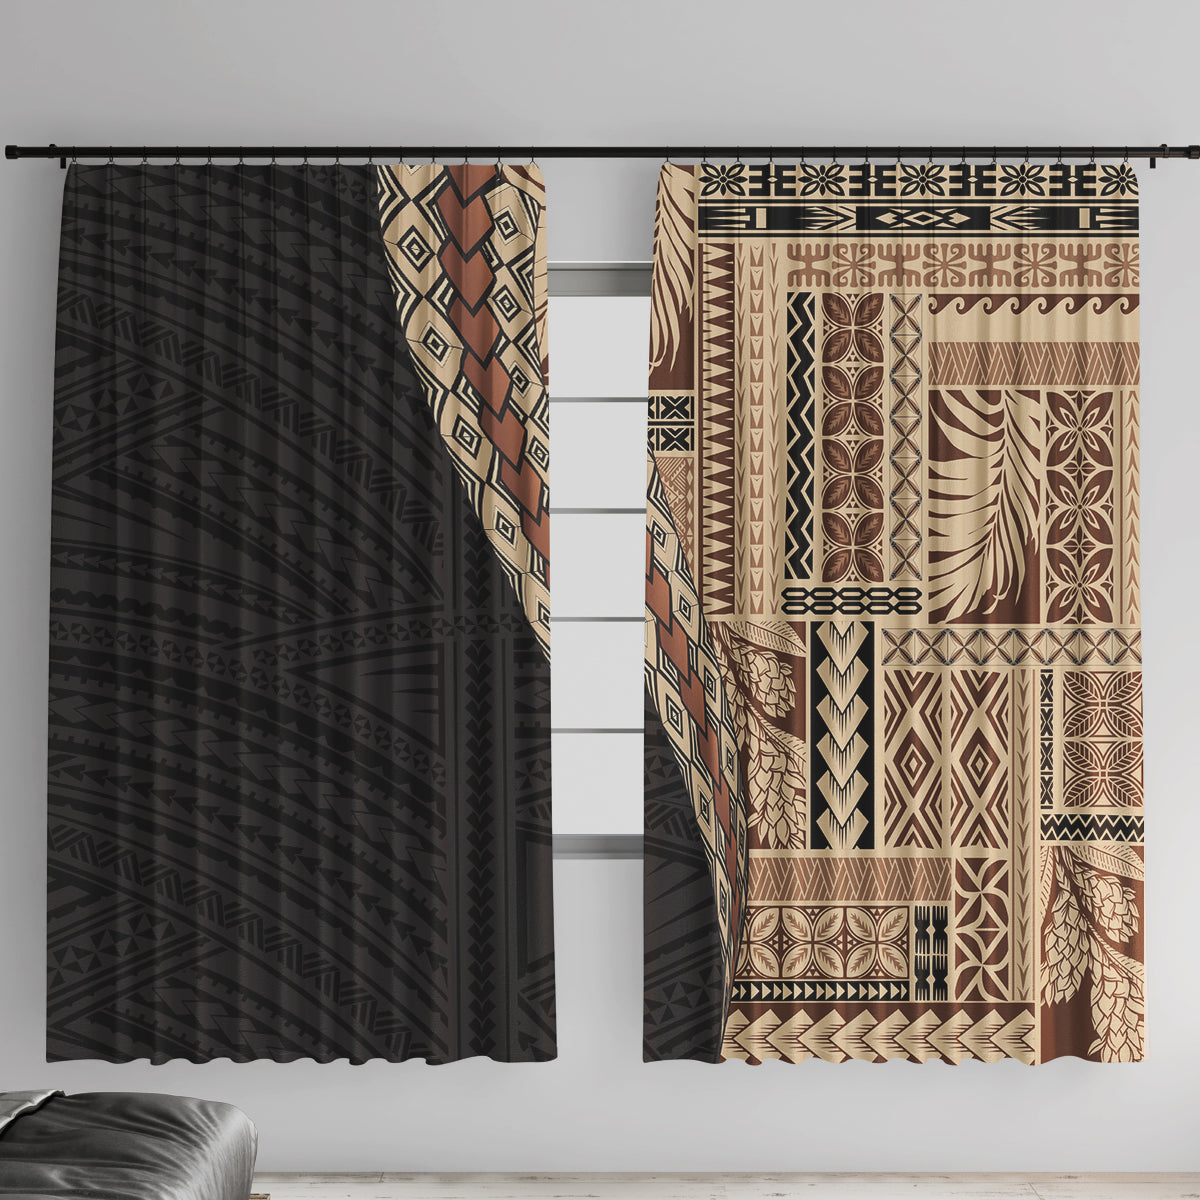 Samoa Siapo Motif Half Style Window Curtain Brown Version